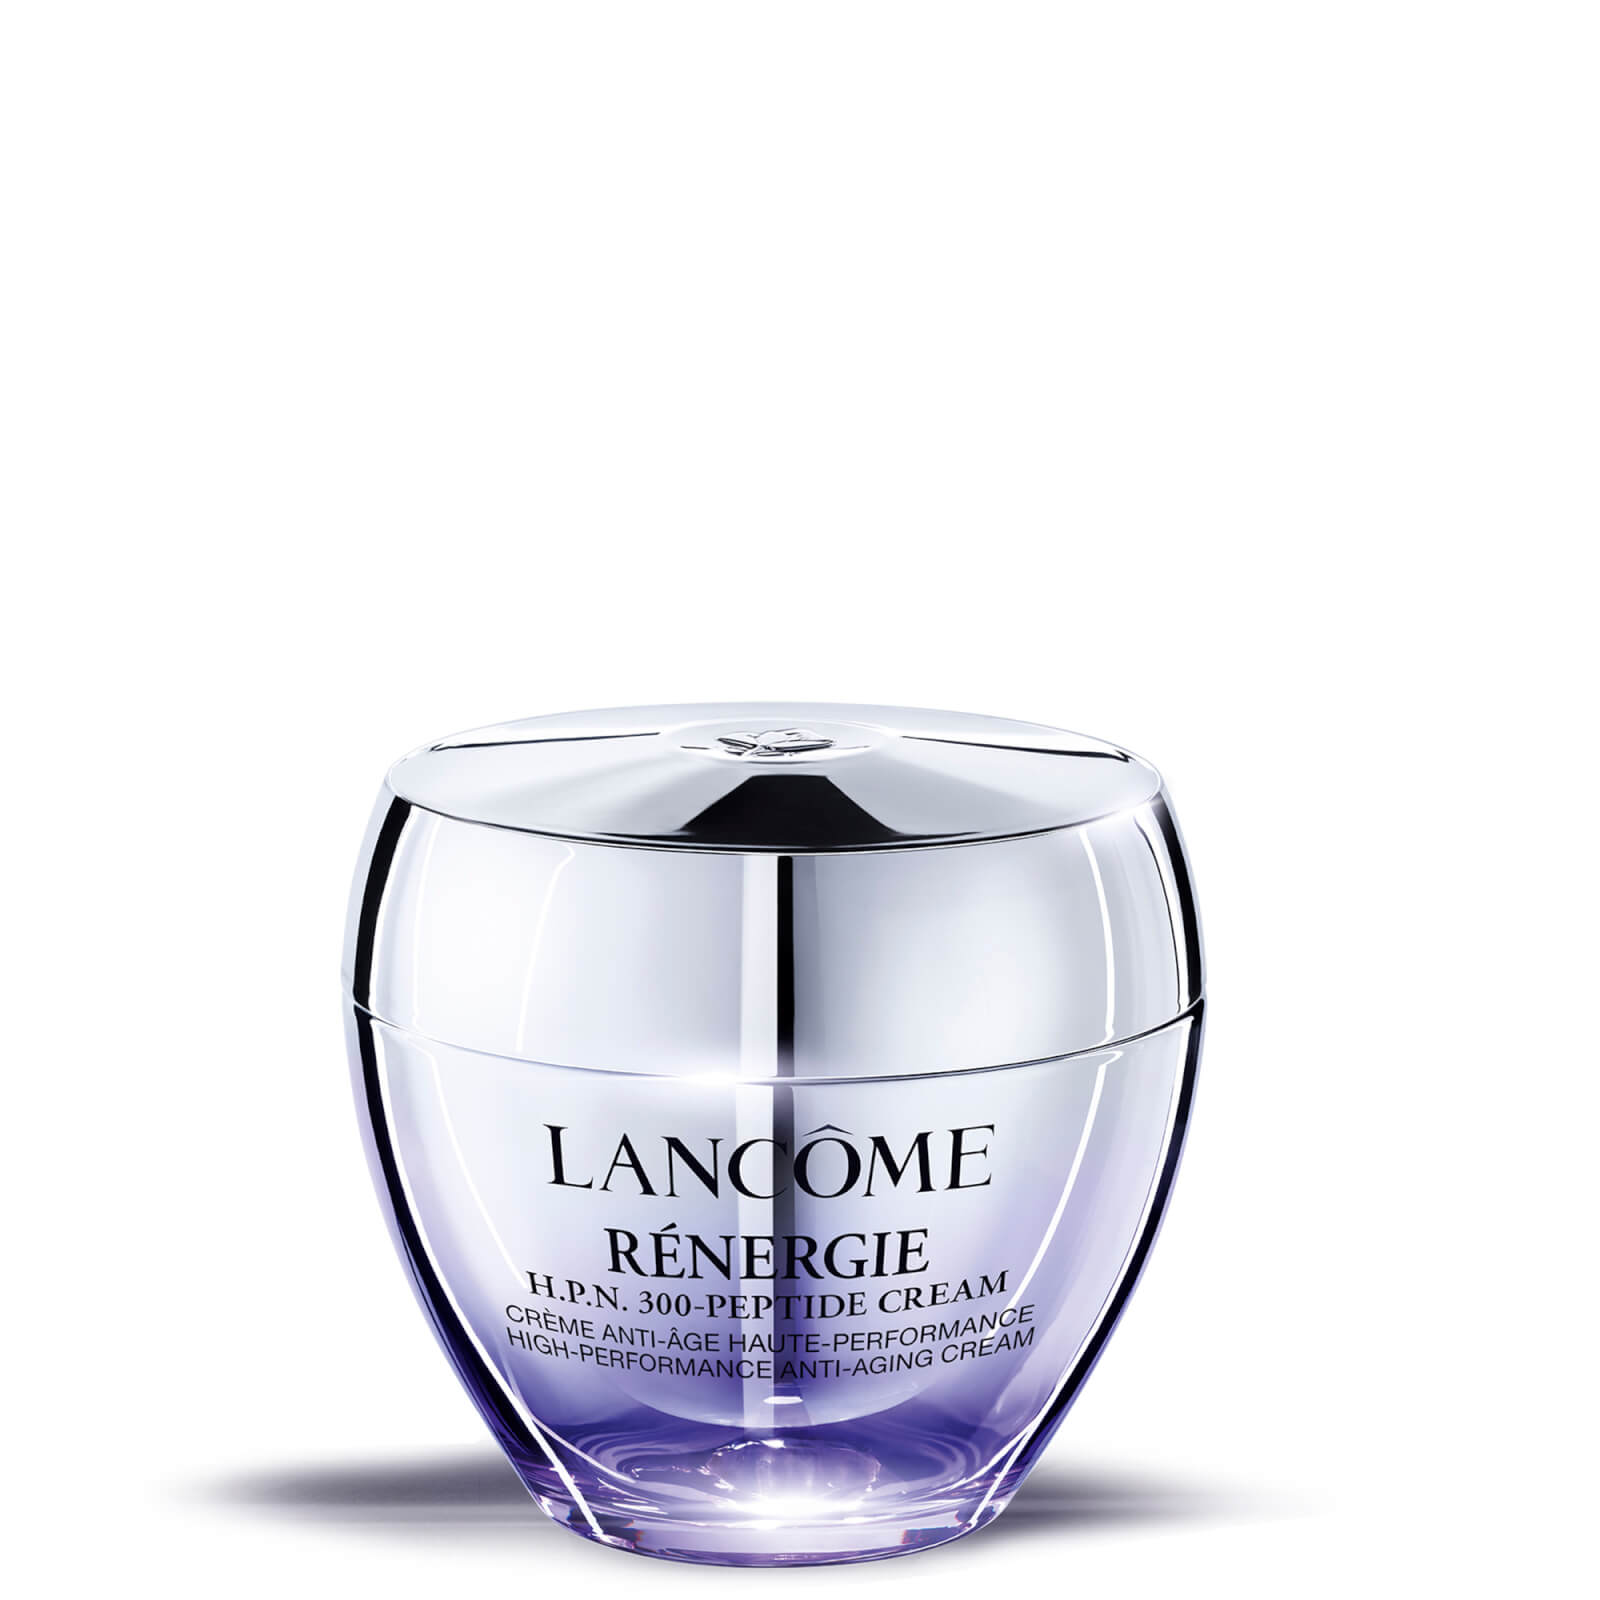 Image of Lancôme Rénergie H.P.N. 300-Peptide Cream 50ml Refill